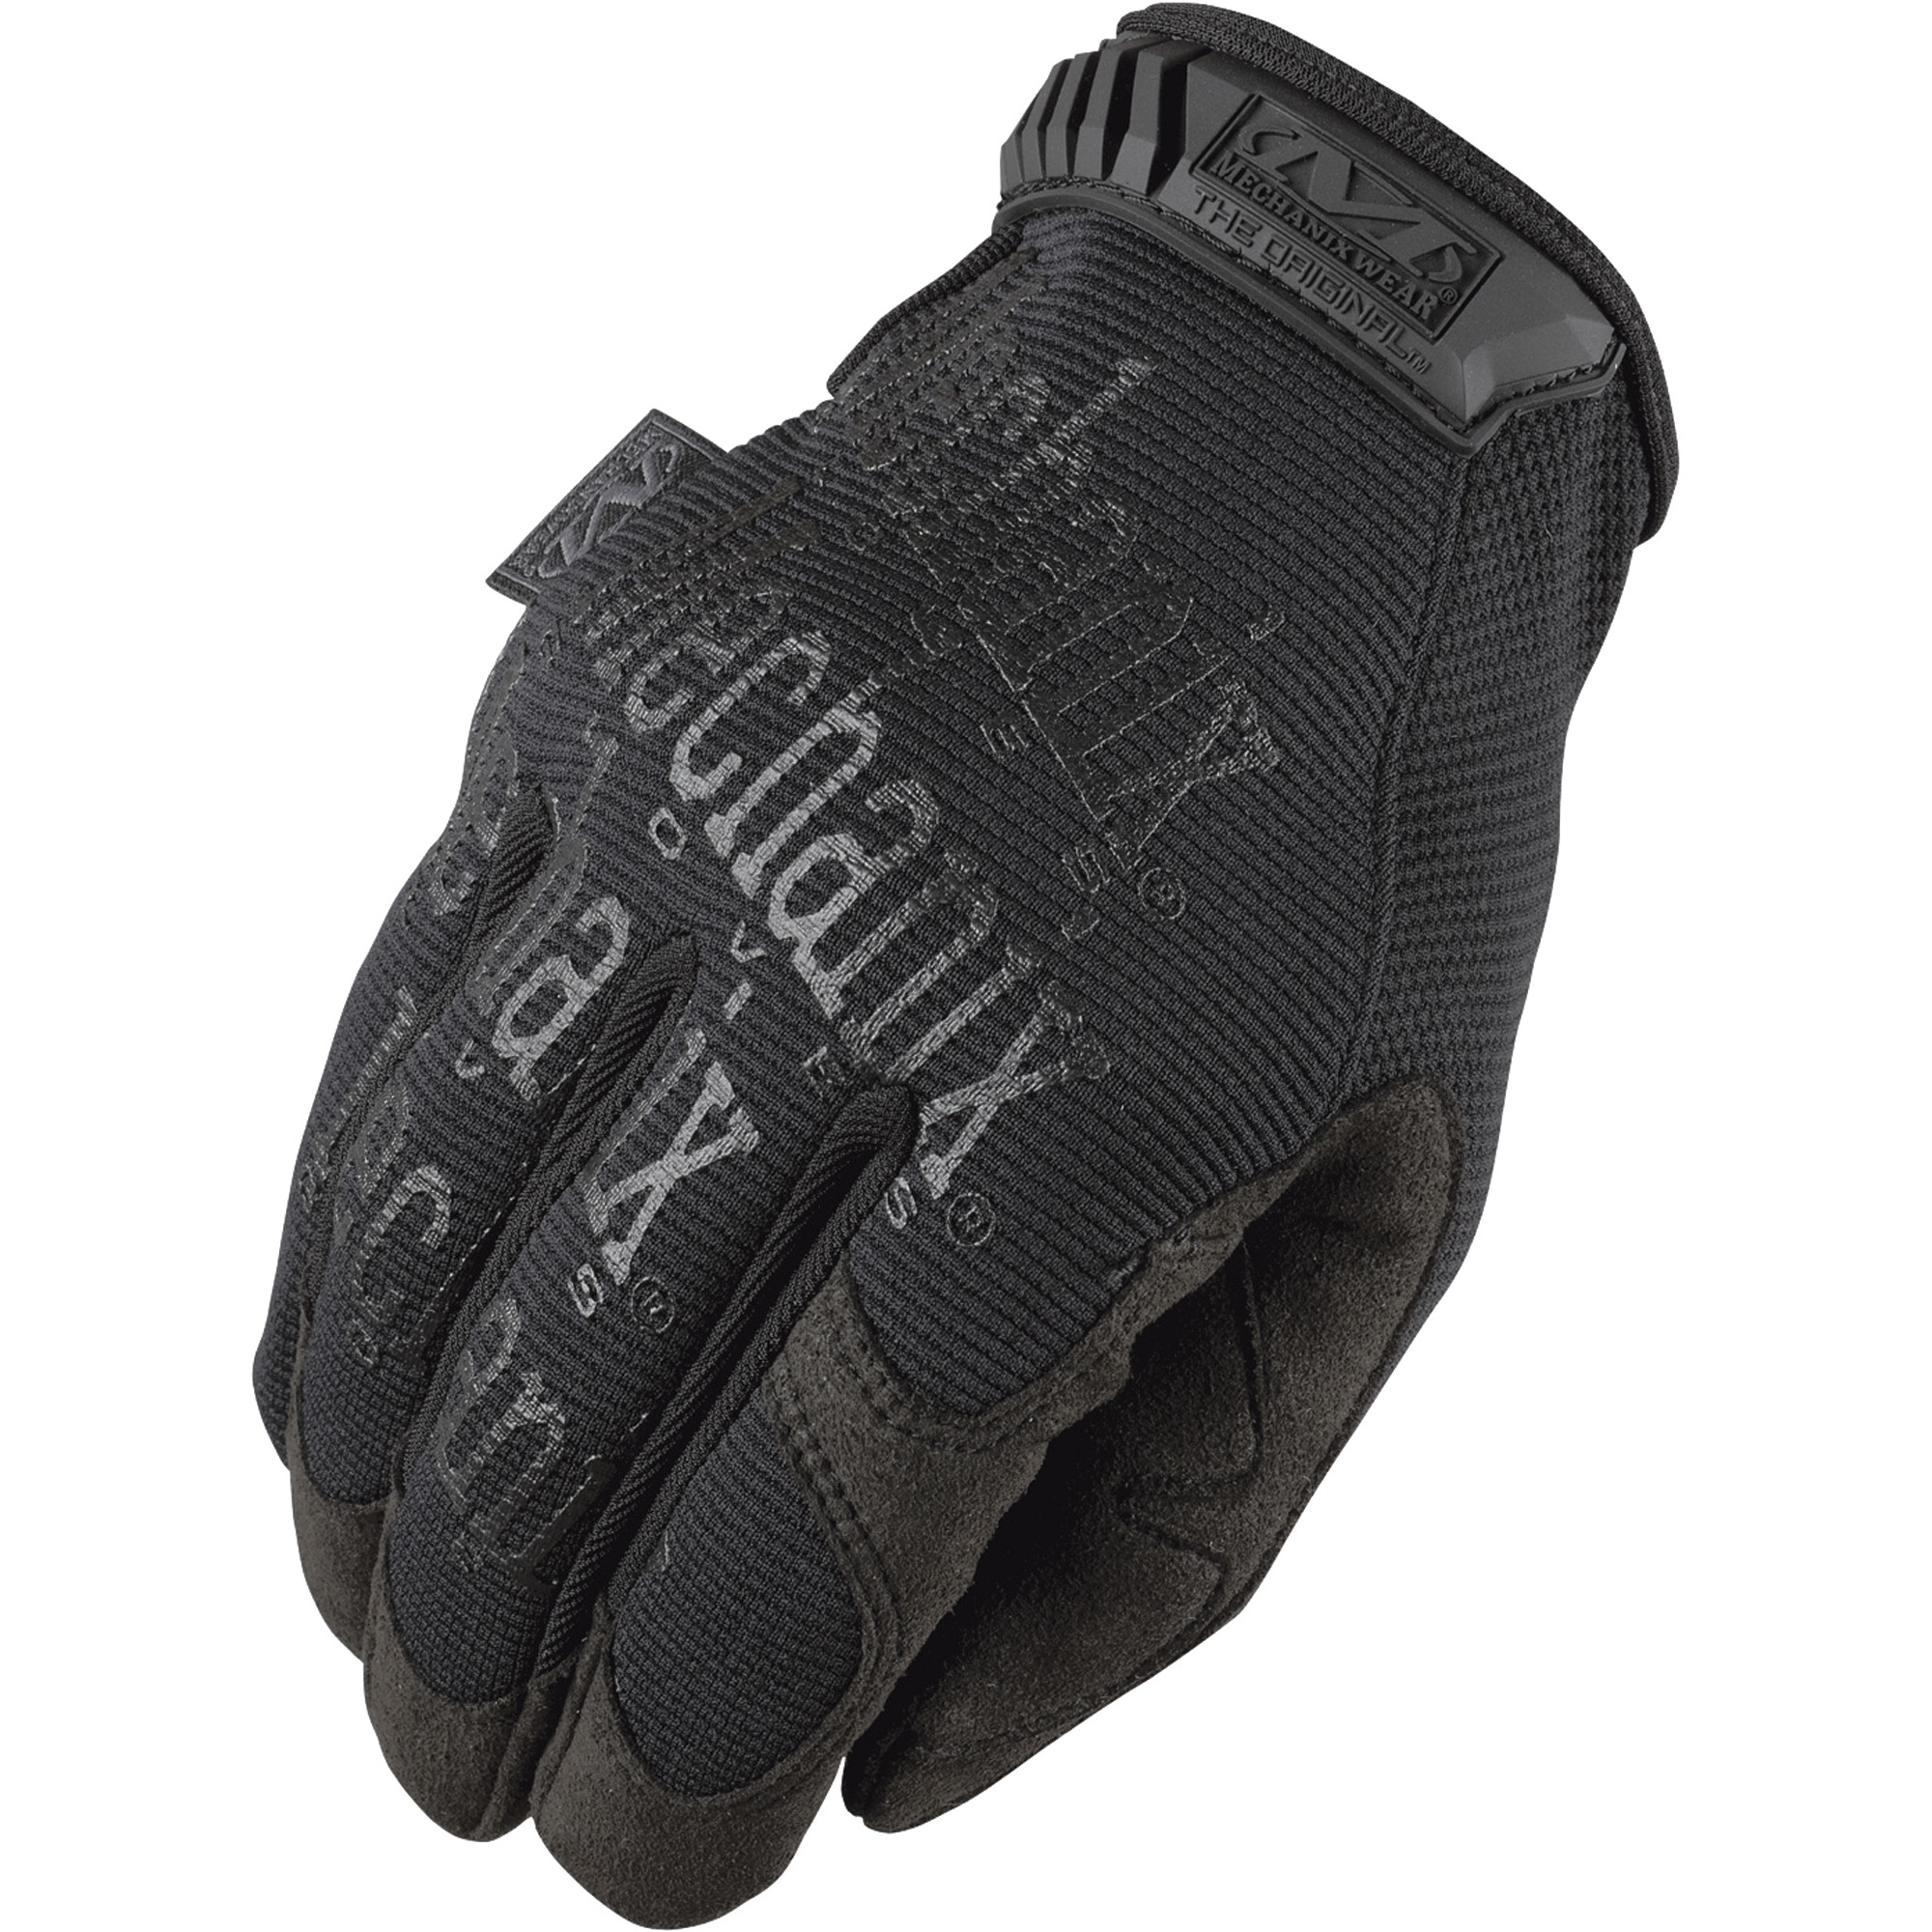 Mechanix Men's Wear Original Gloves - Covert, Large, Model MG-55-010